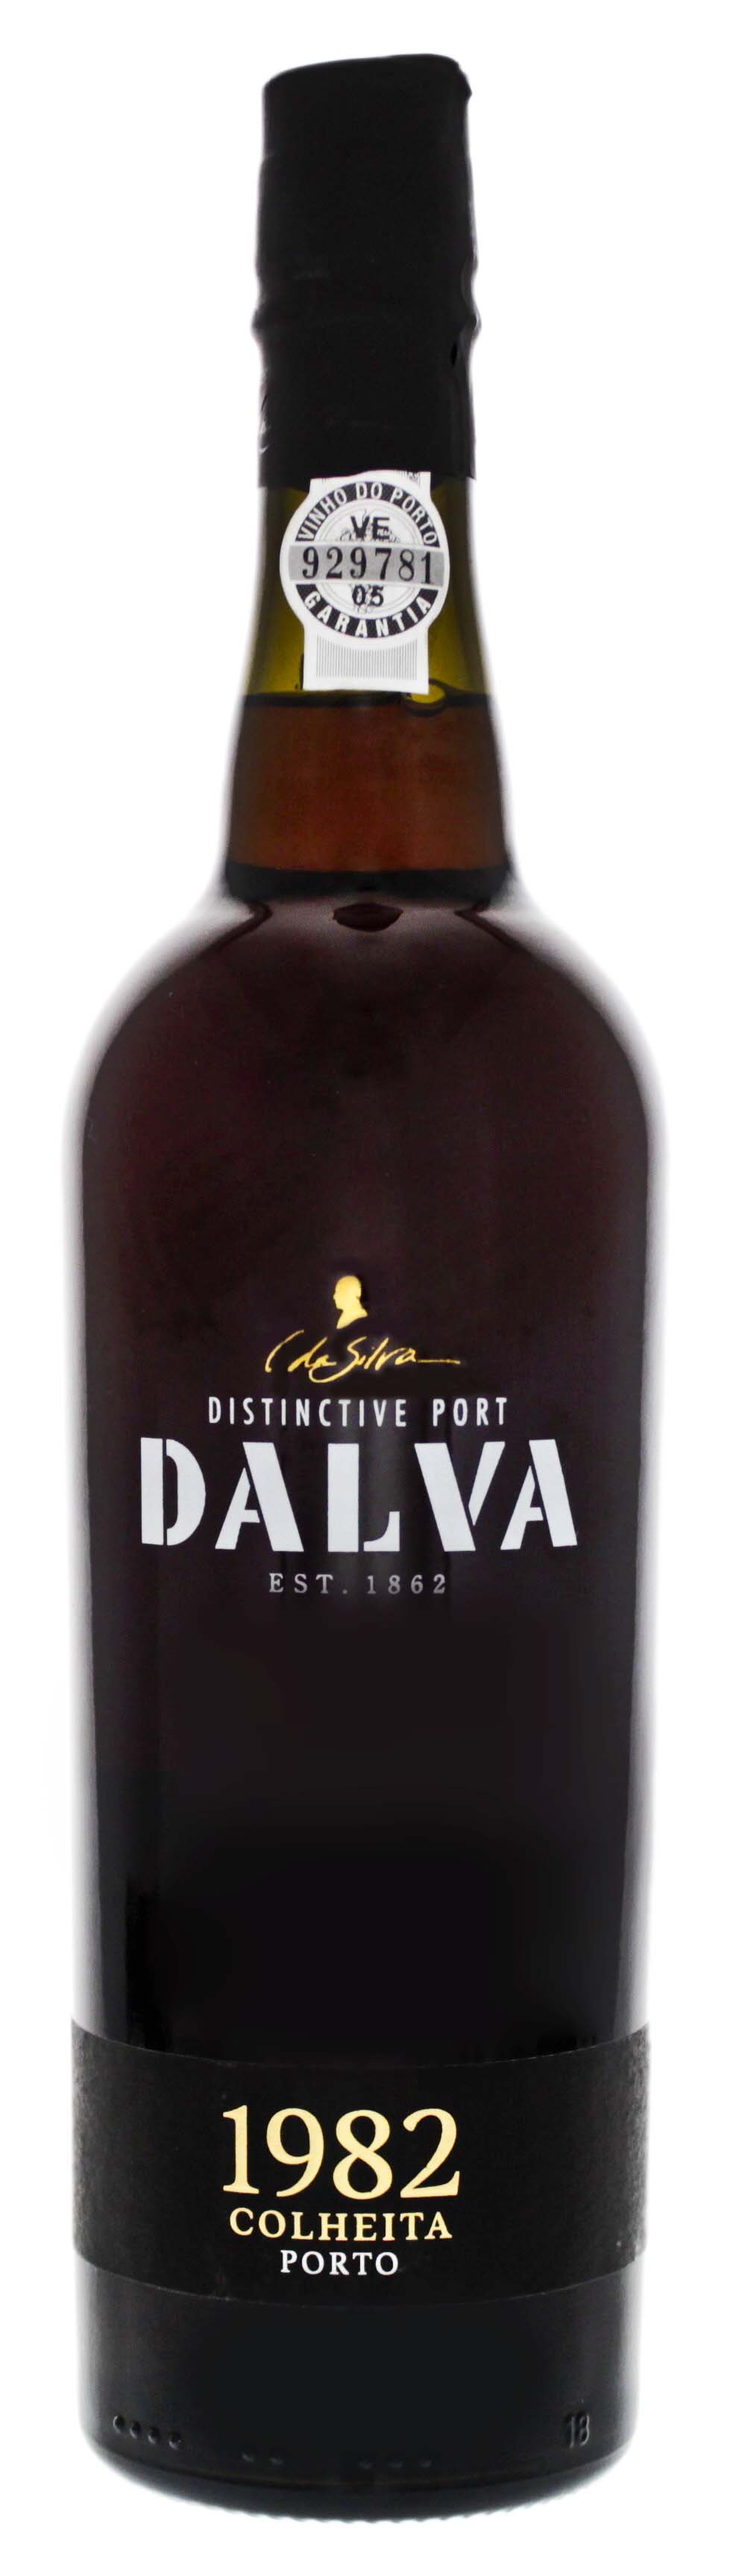 Dalva Colheita Port 1982 0,75L